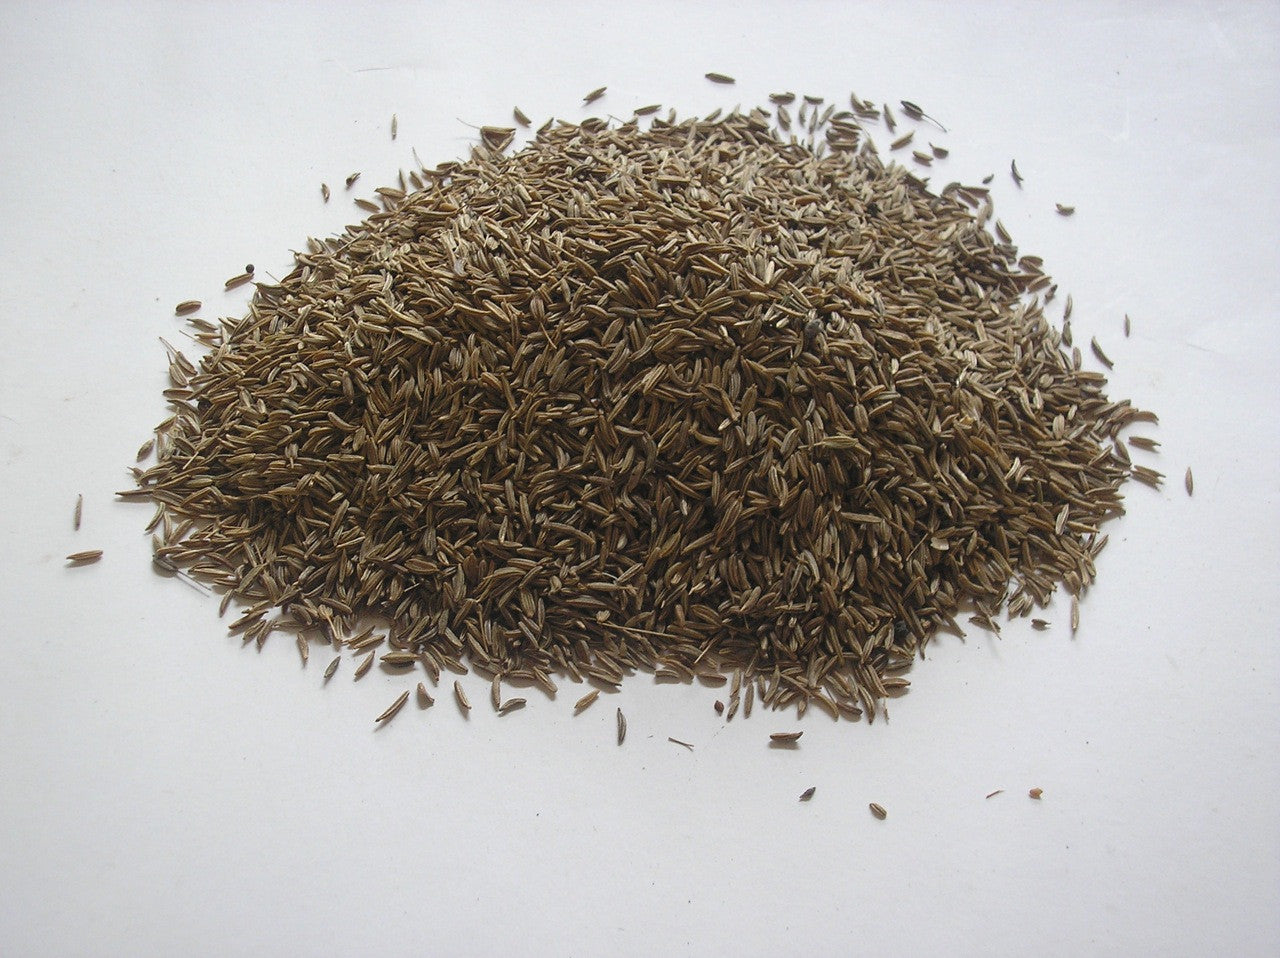 Caraway / Kümmel Seeds (Carum Carvi)